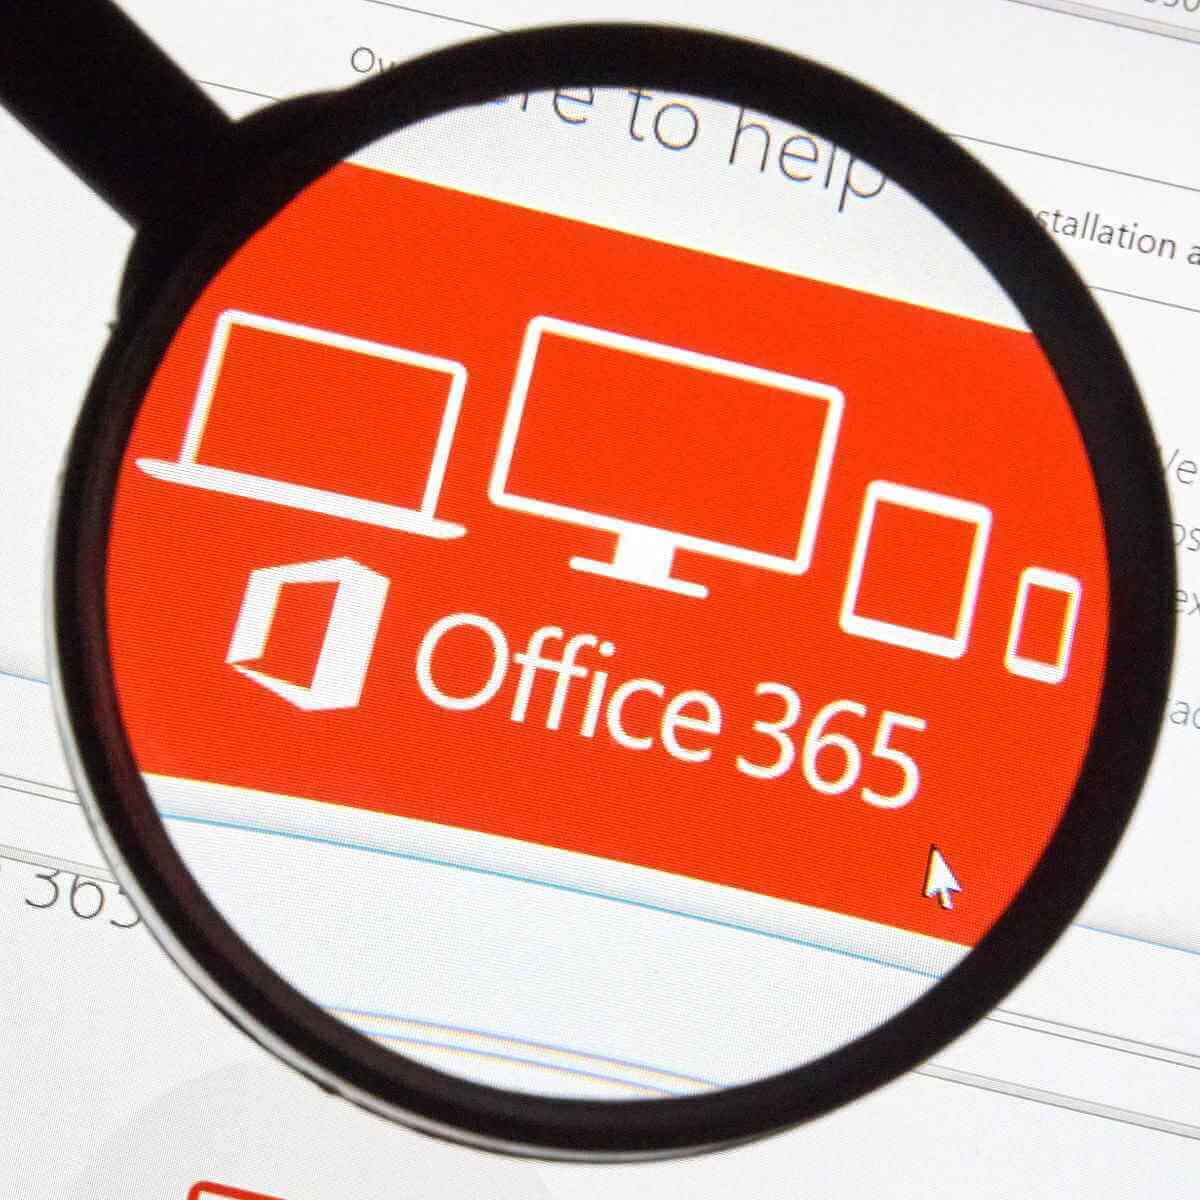 how to fix stalledduetotarget_mdbavailability Office 365 migration error